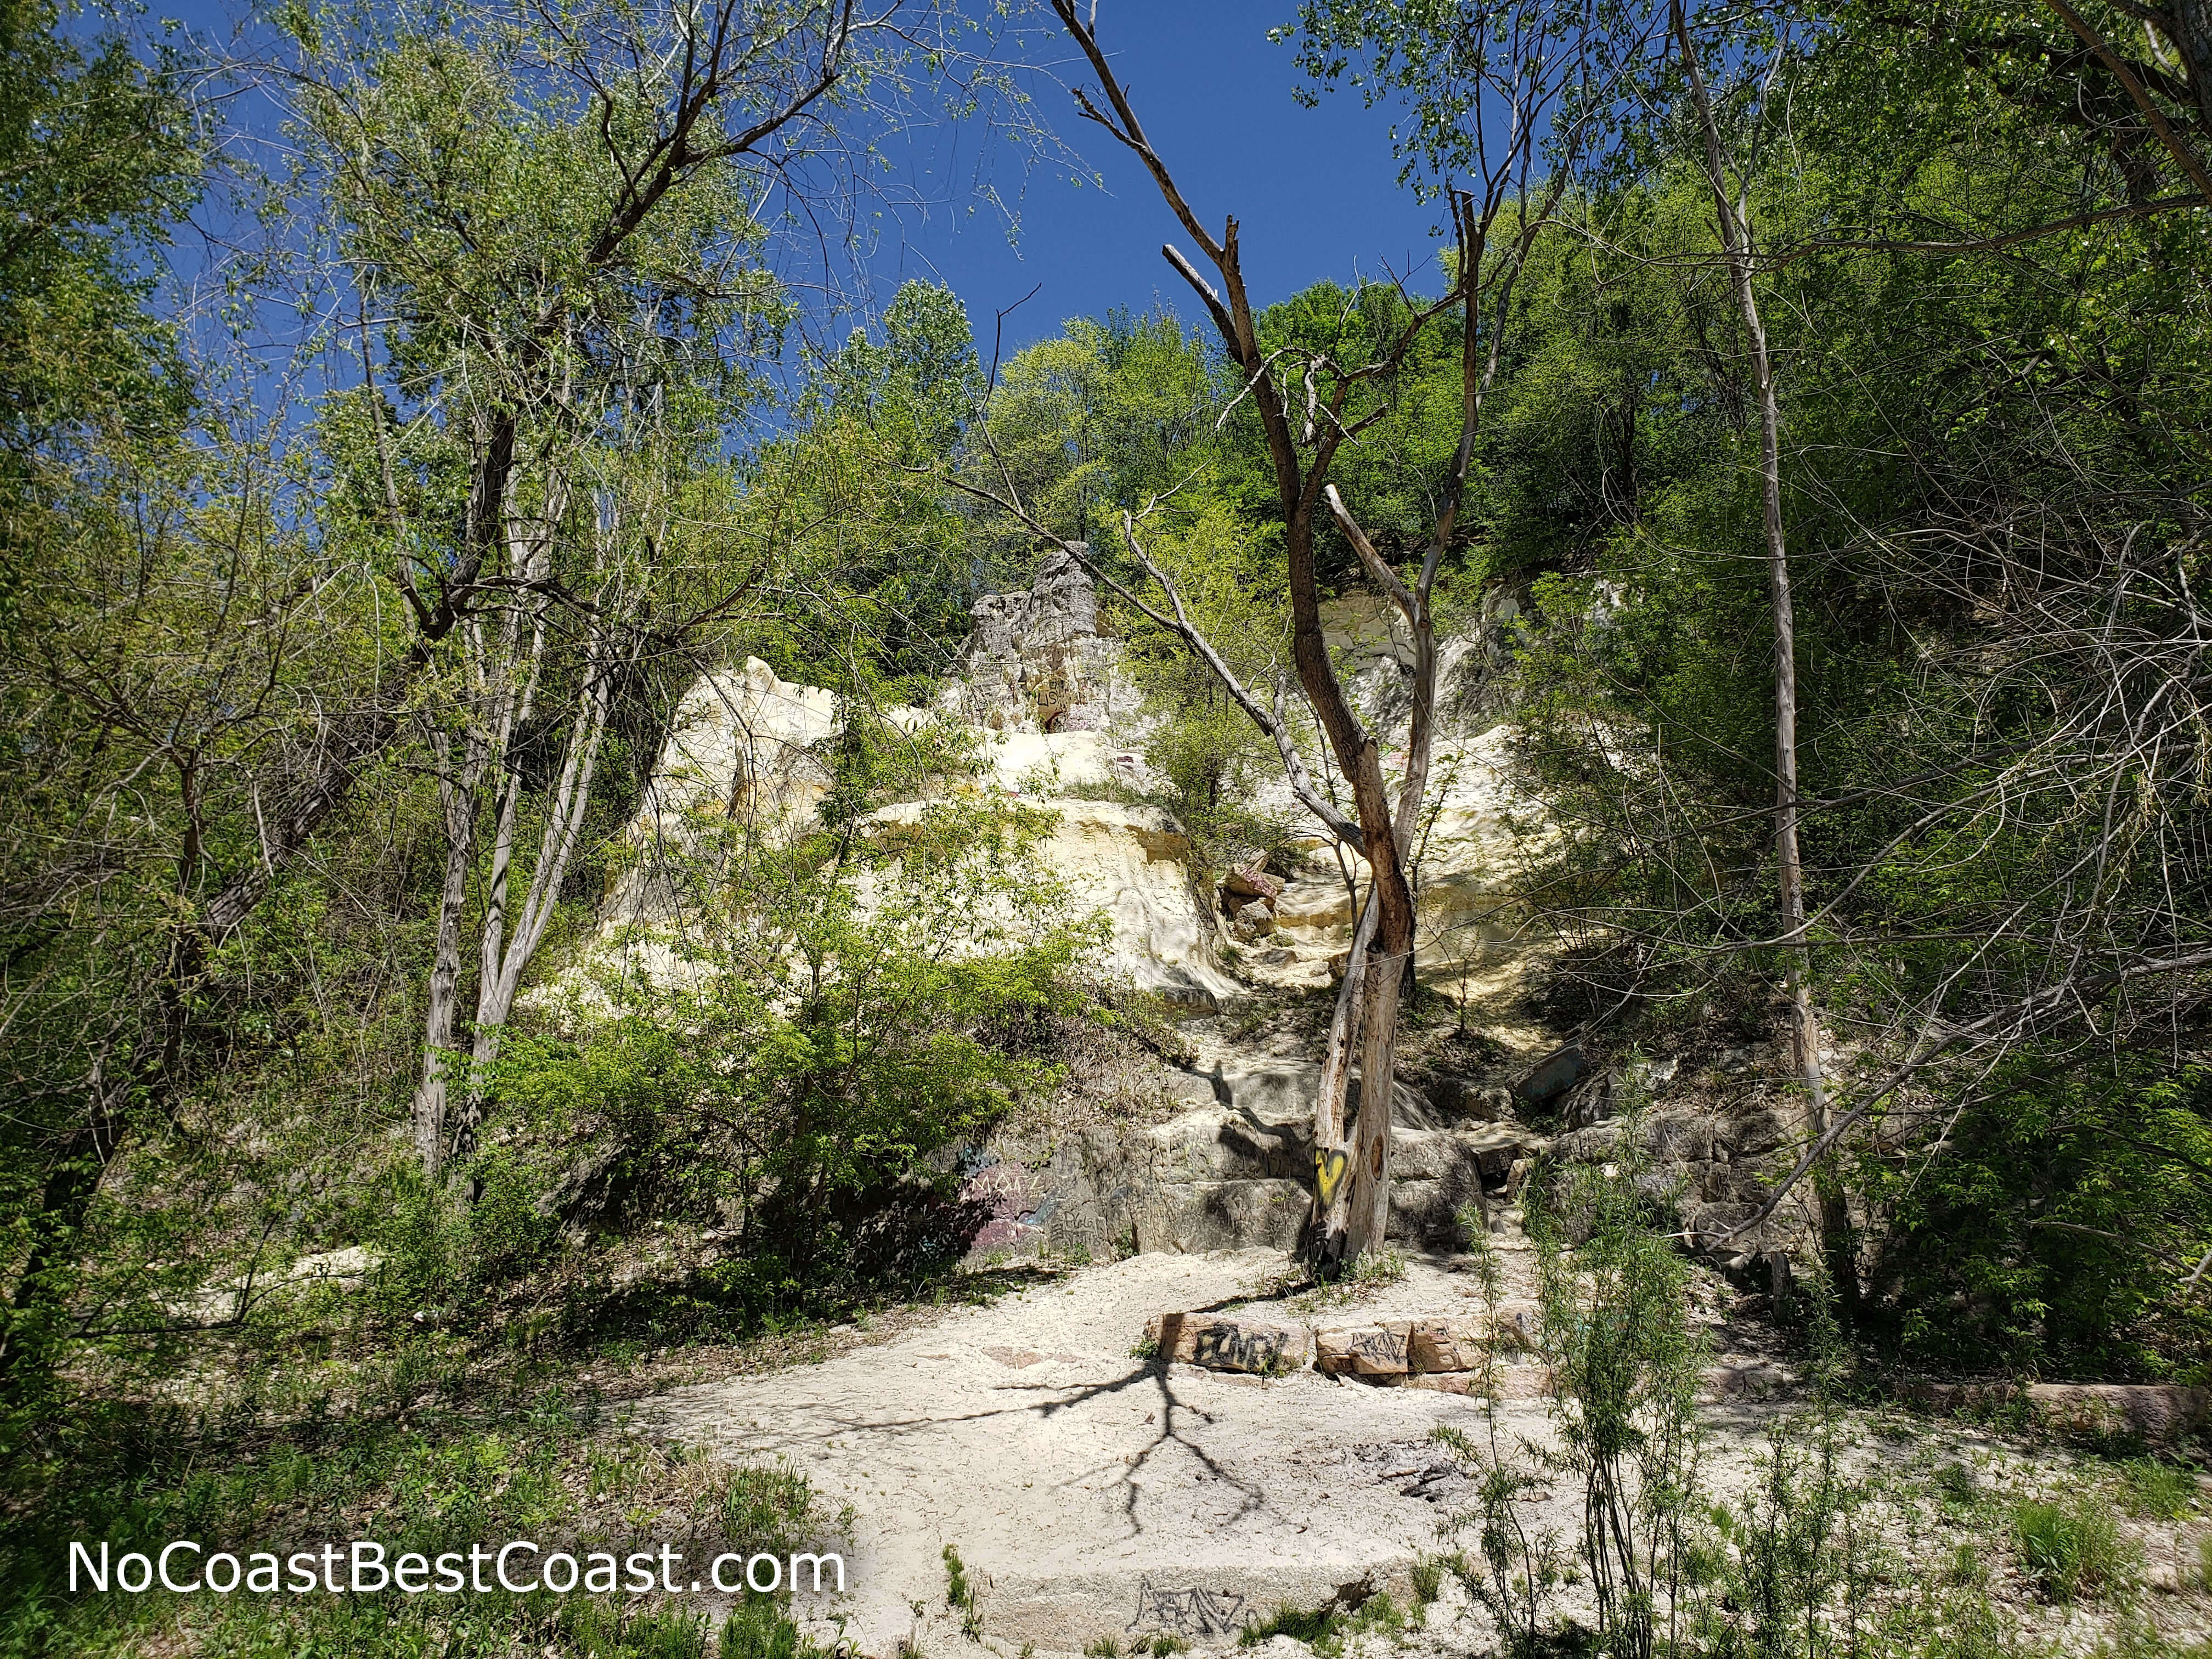 A limestone outcropping along the trail